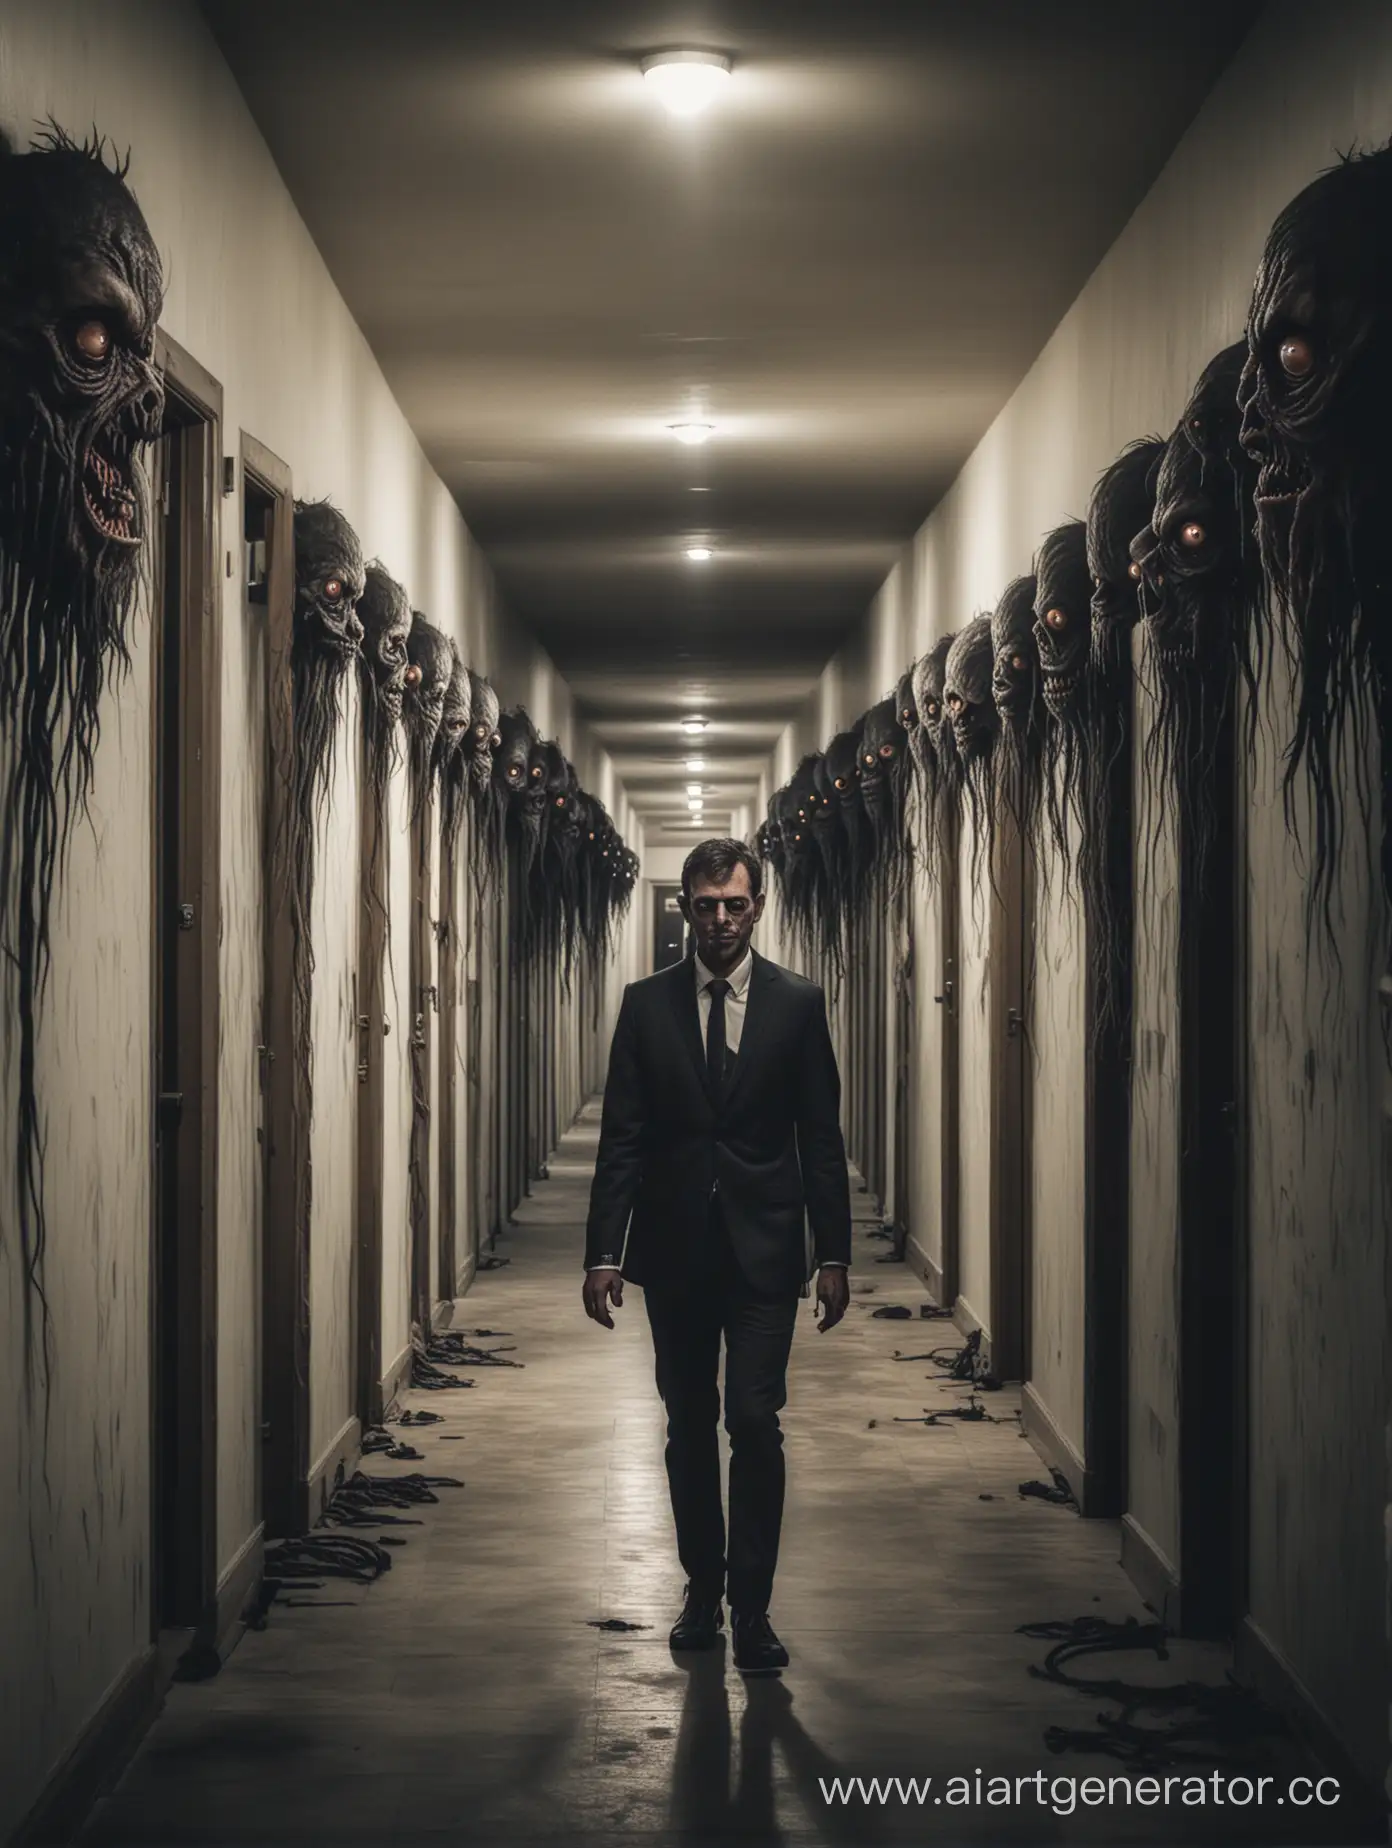 Terrifying-Monster-Man-with-Many-Eyes-in-Dark-Corridor